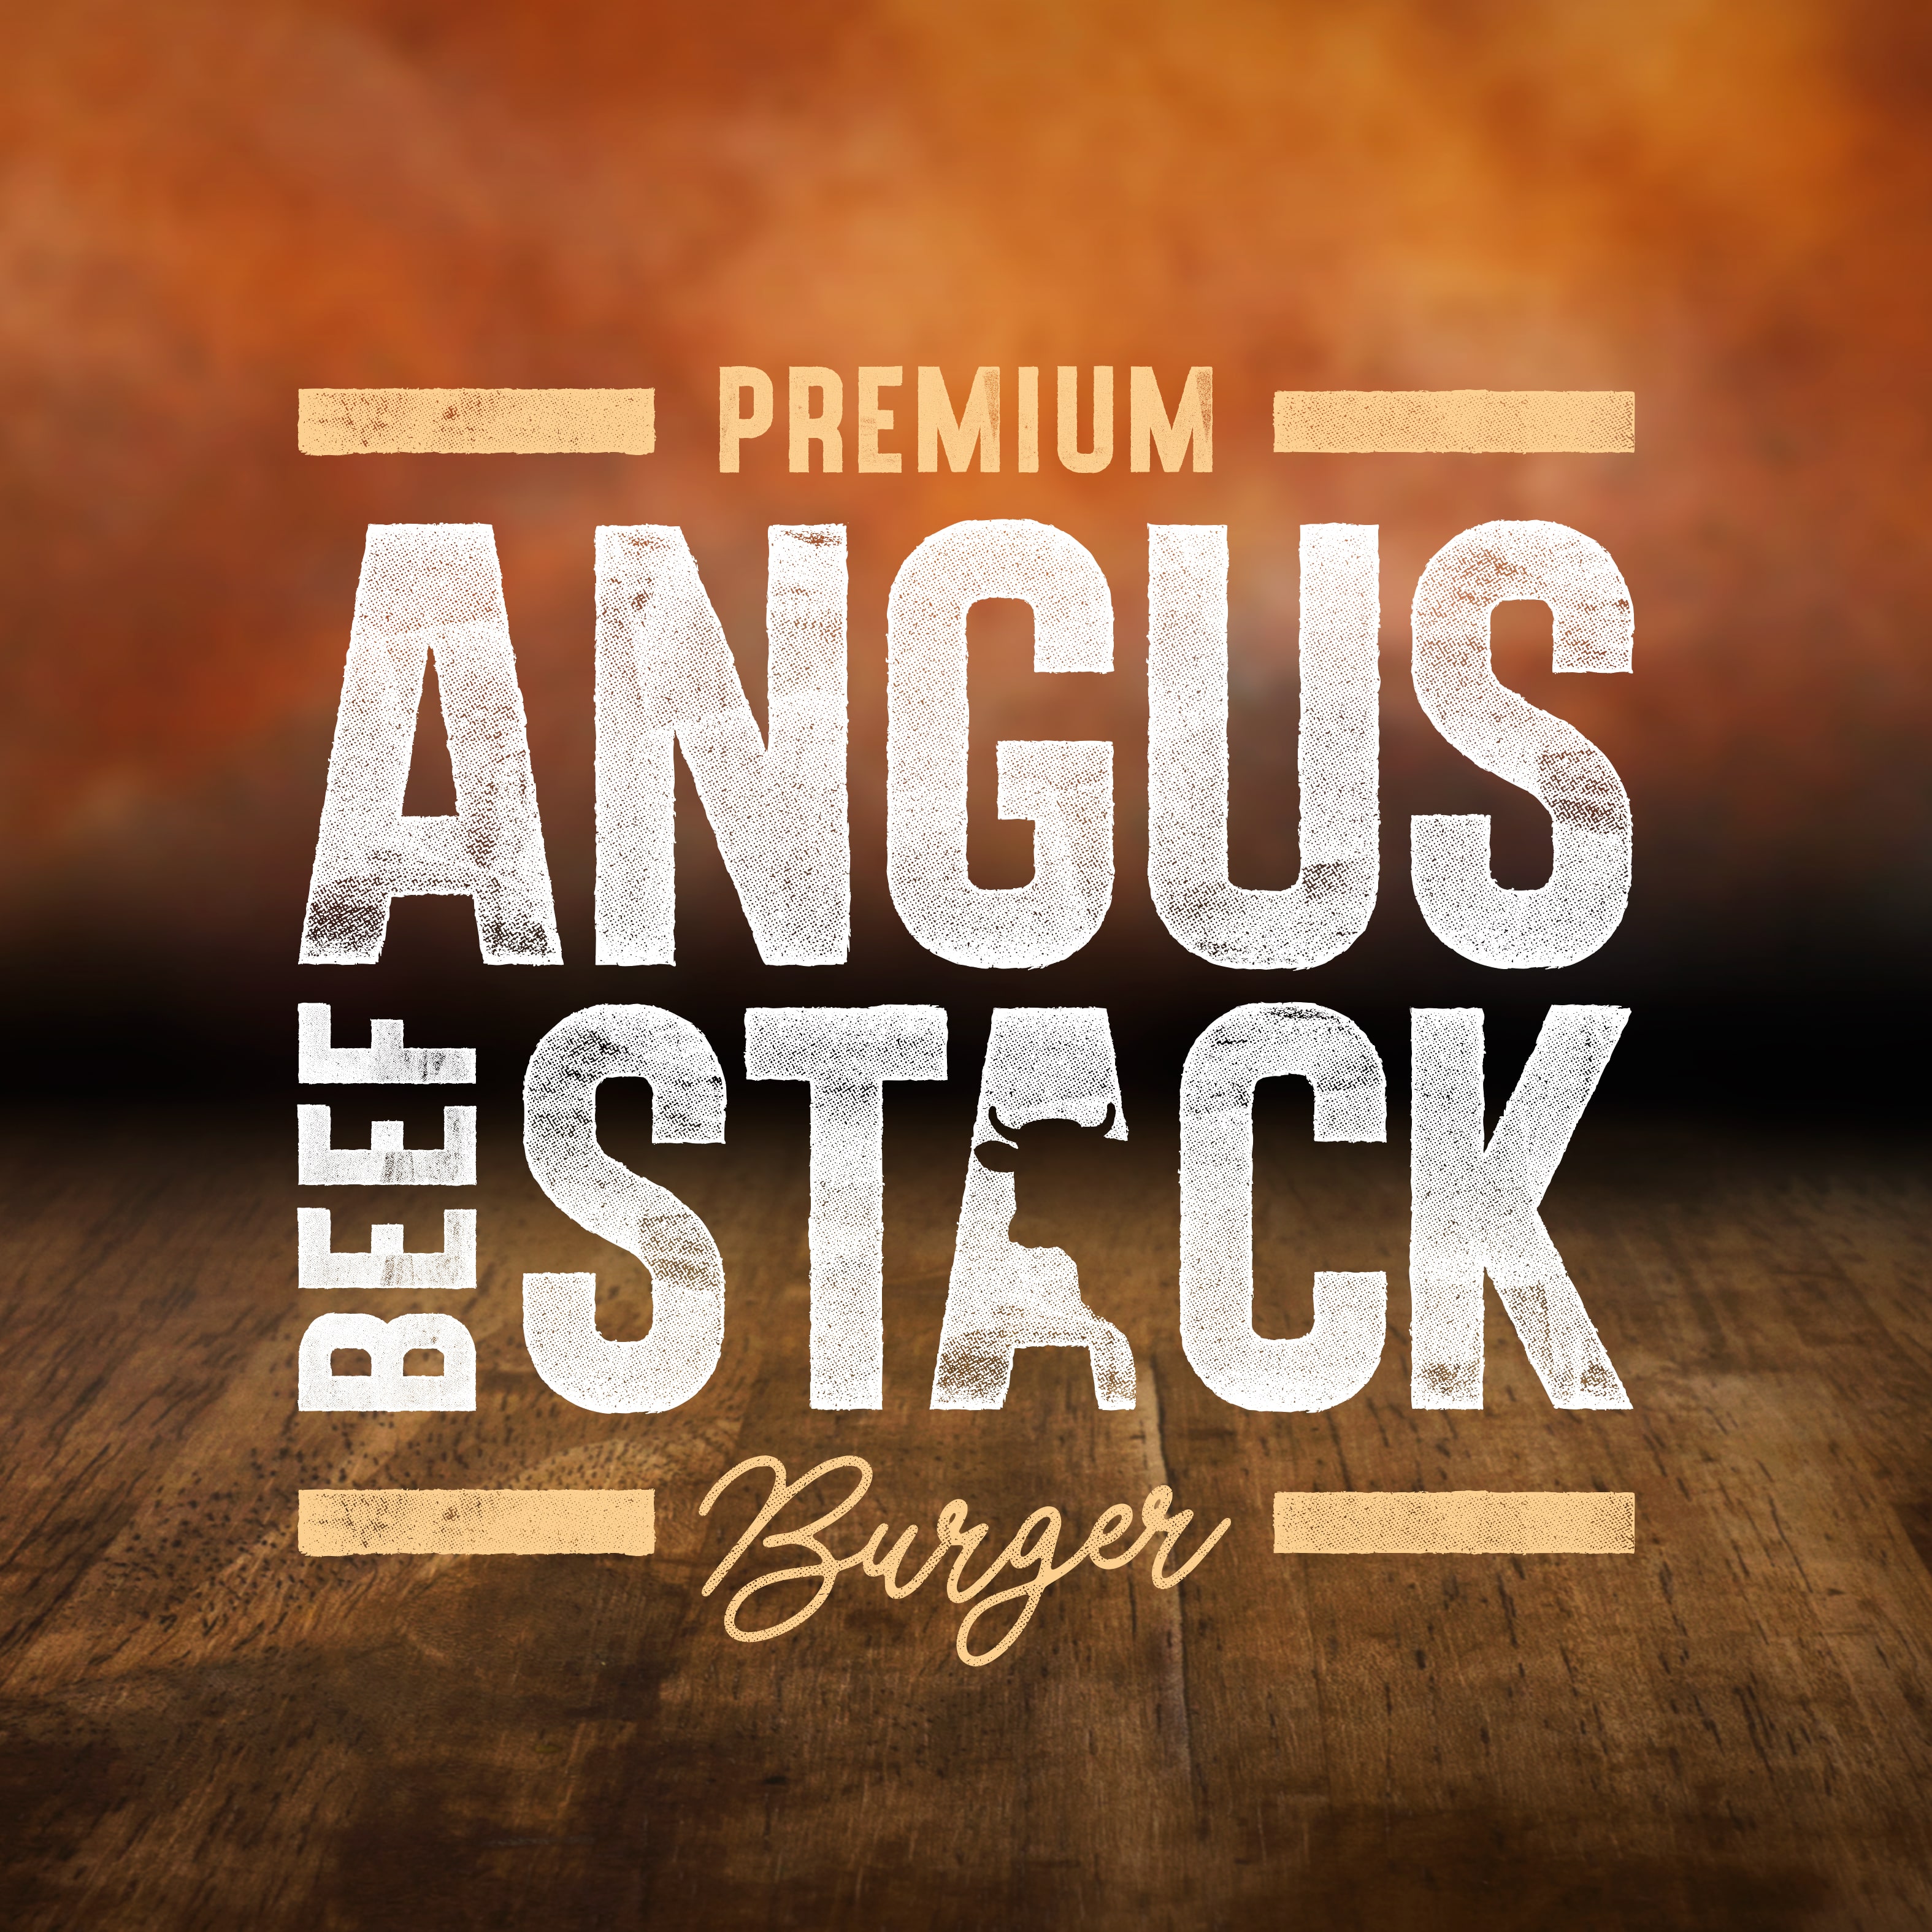 burger and sauce angus beef stack burger logo bg